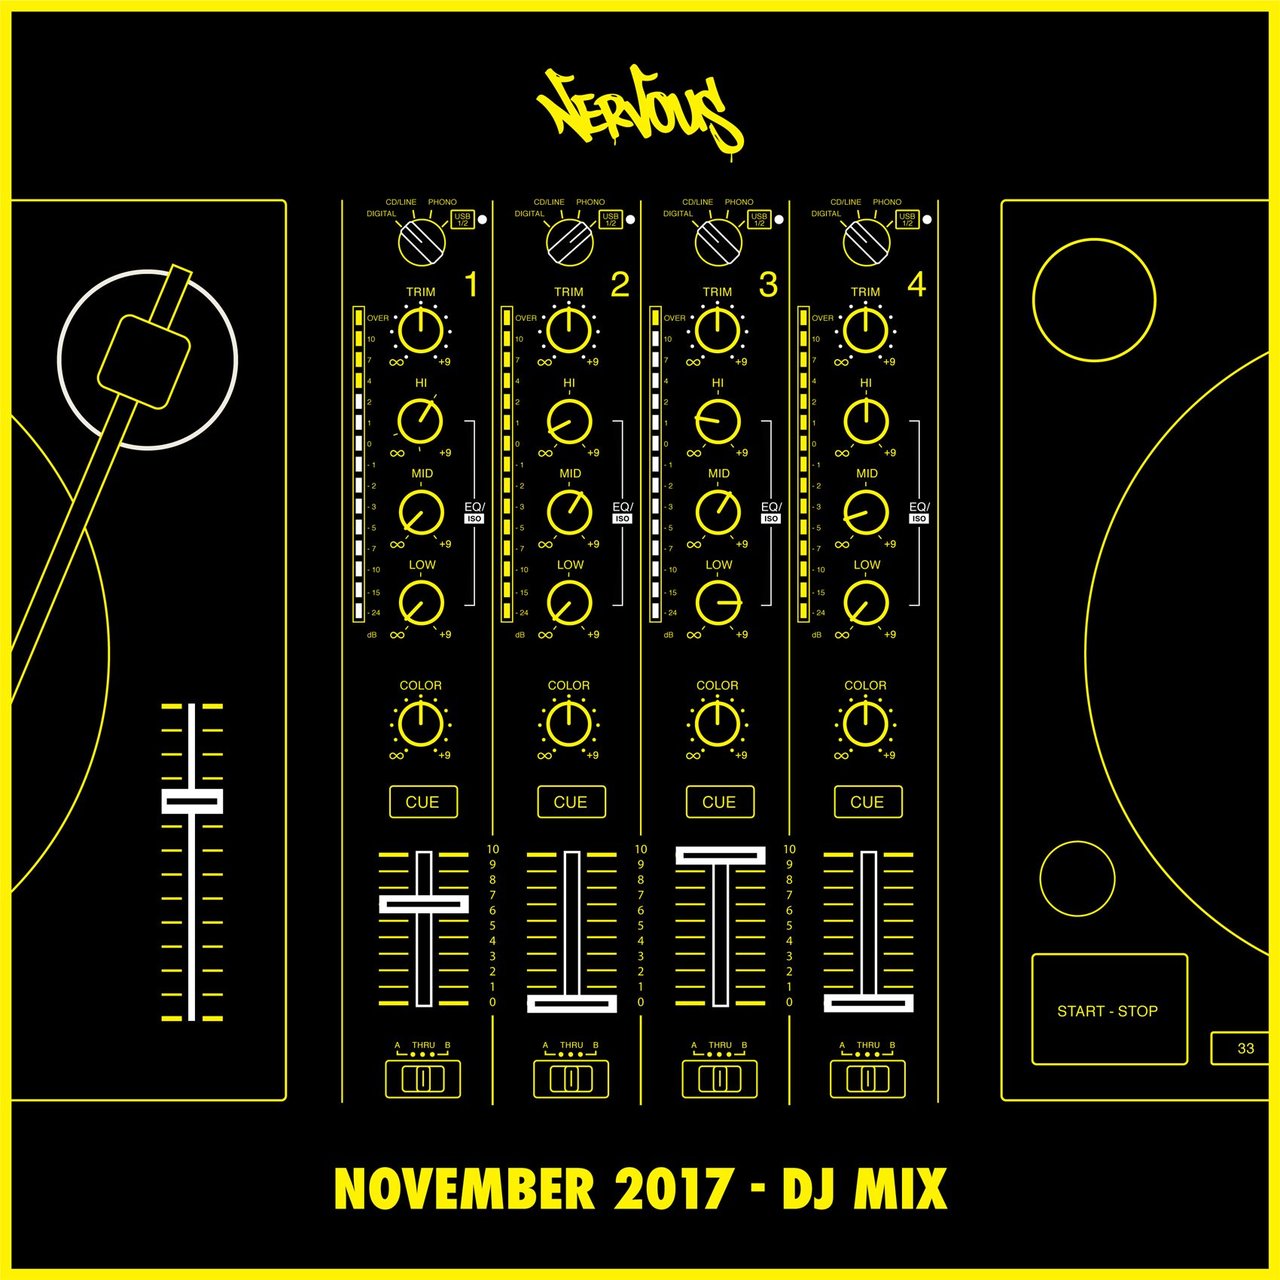 VA - Nervous November 2017 DJ Mix / Nervous